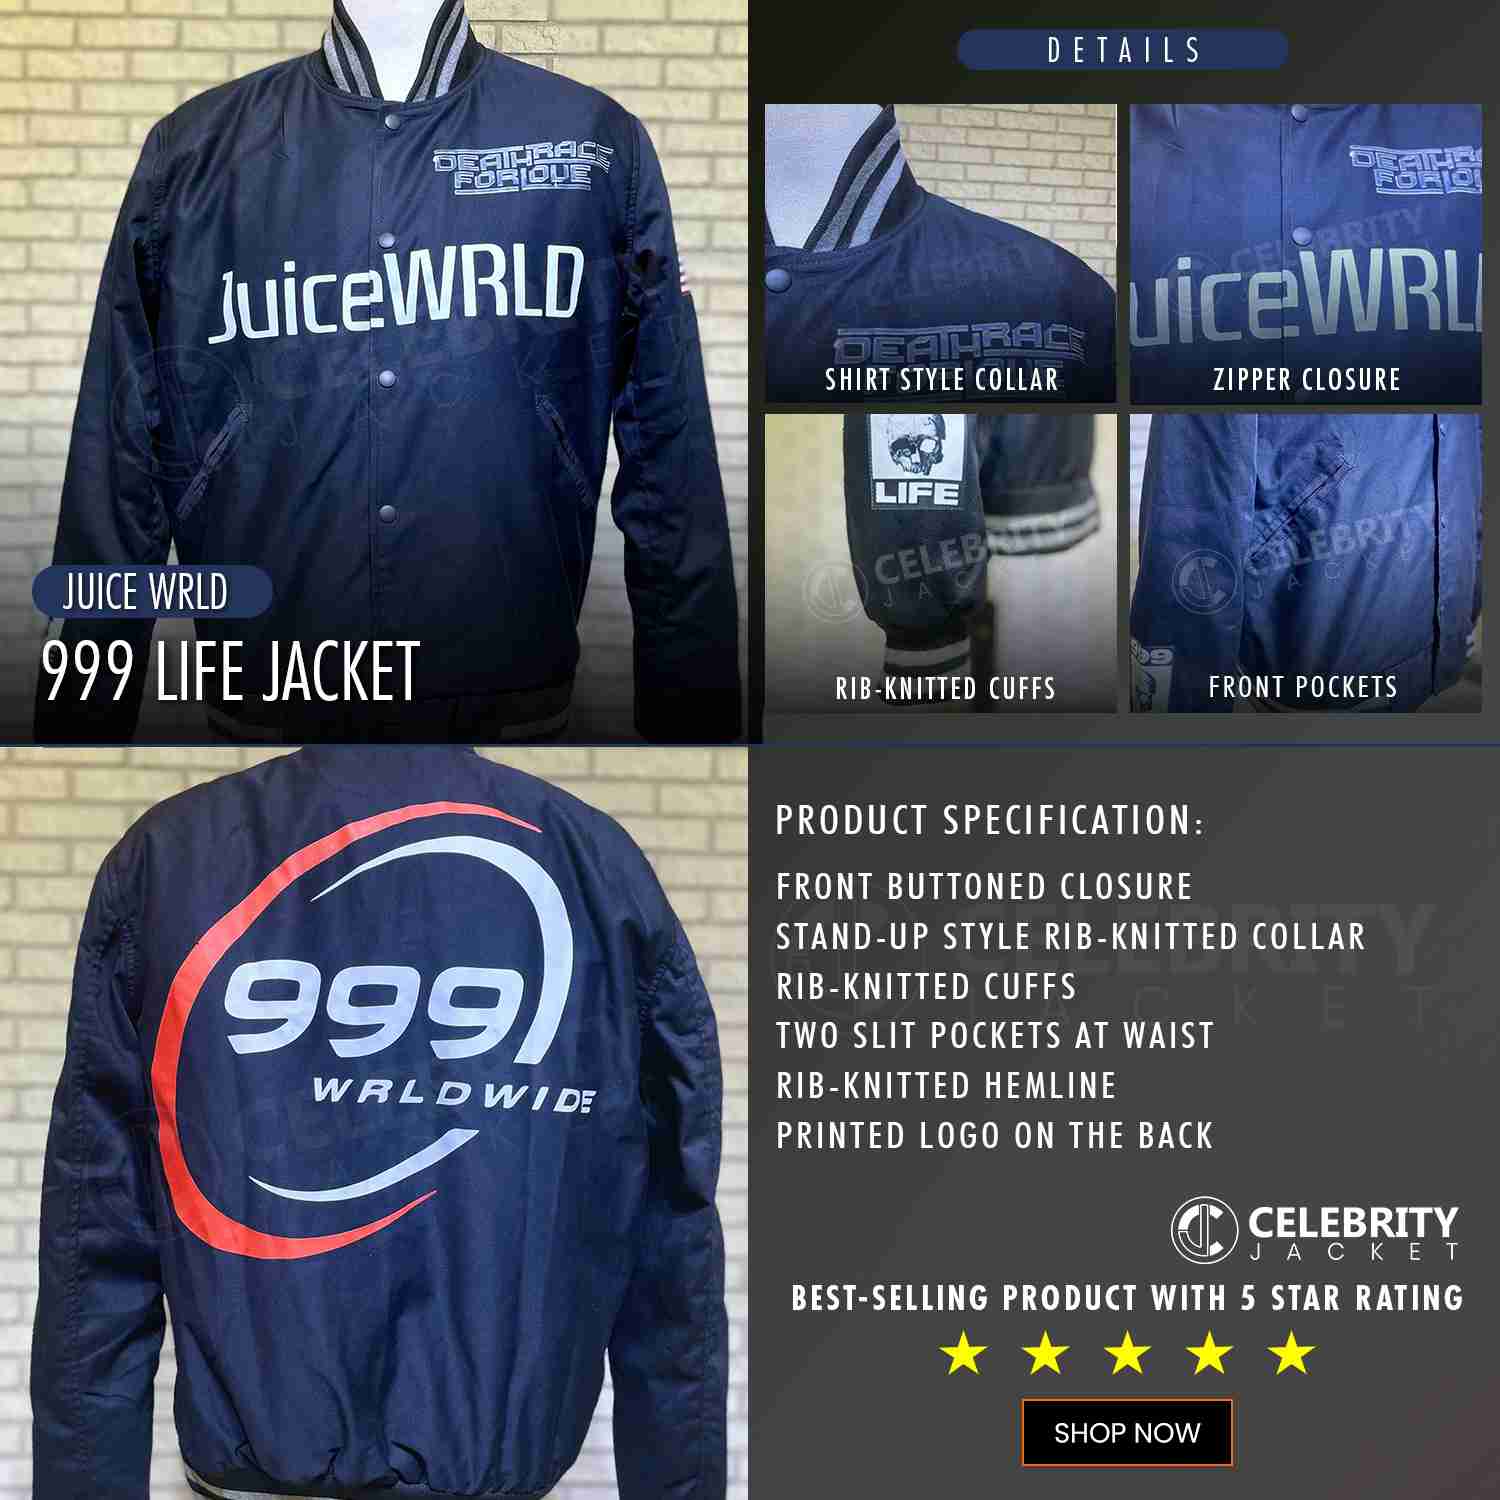 Juice Wrld 999 Life Jacket infogrphics